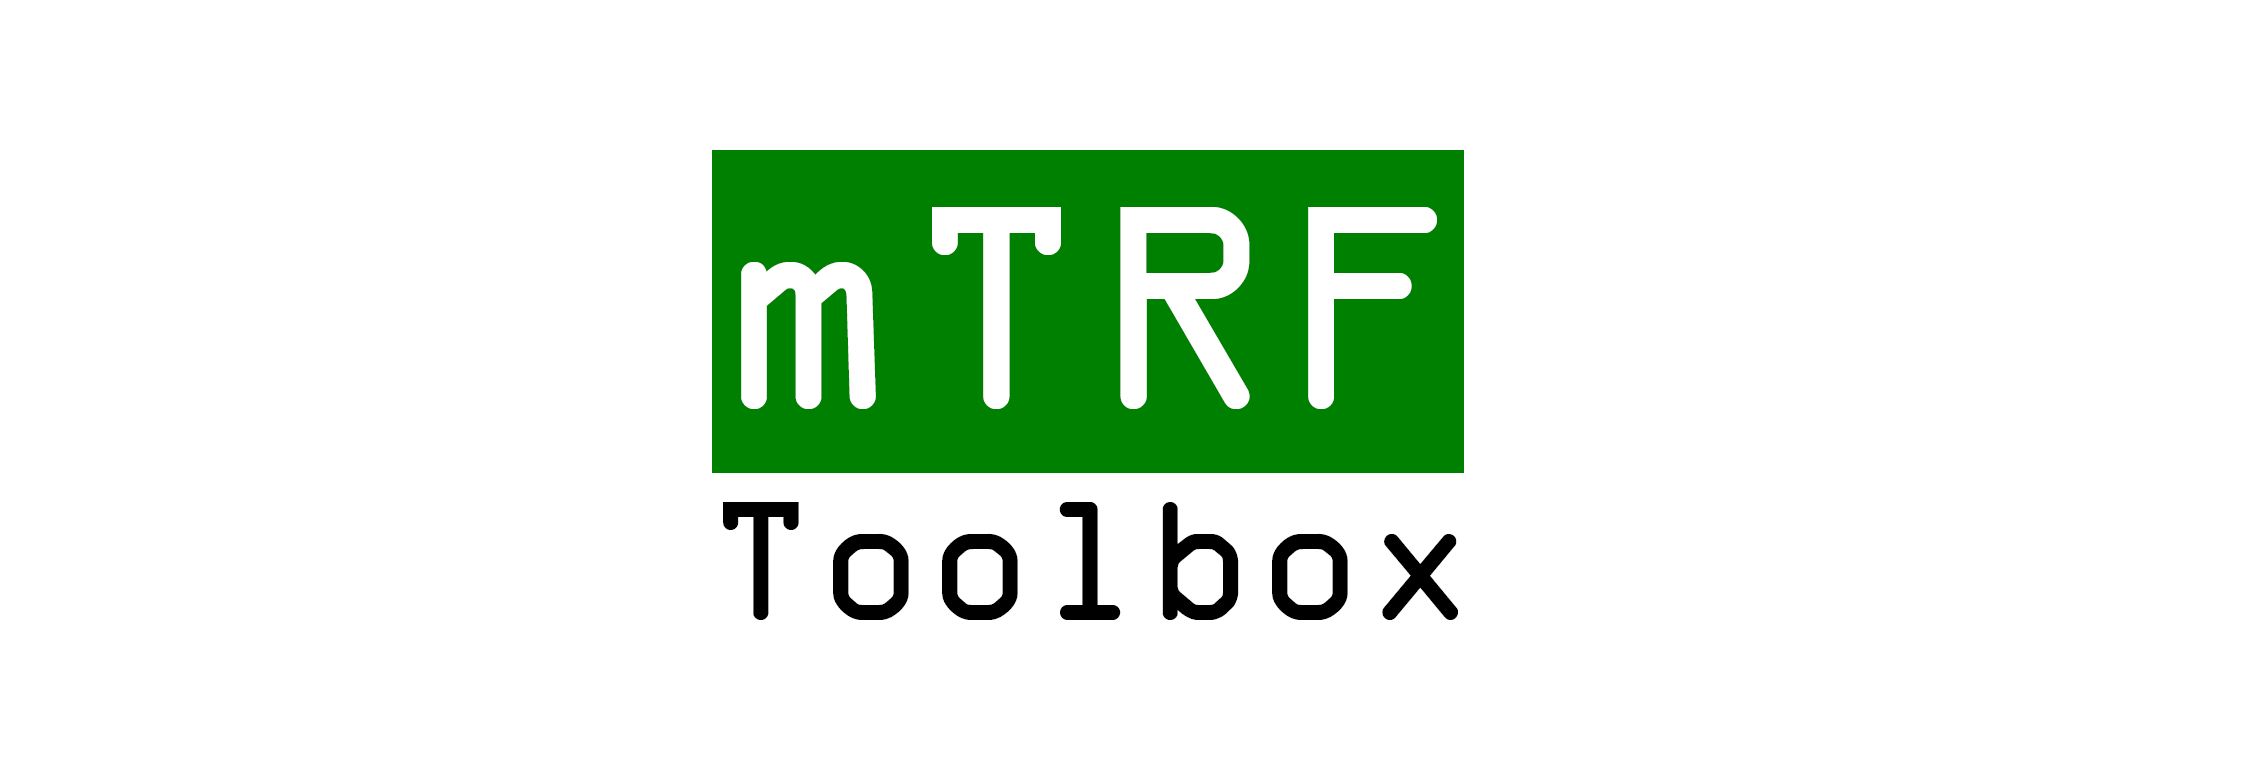 mTRF-Toolbox_logo.png